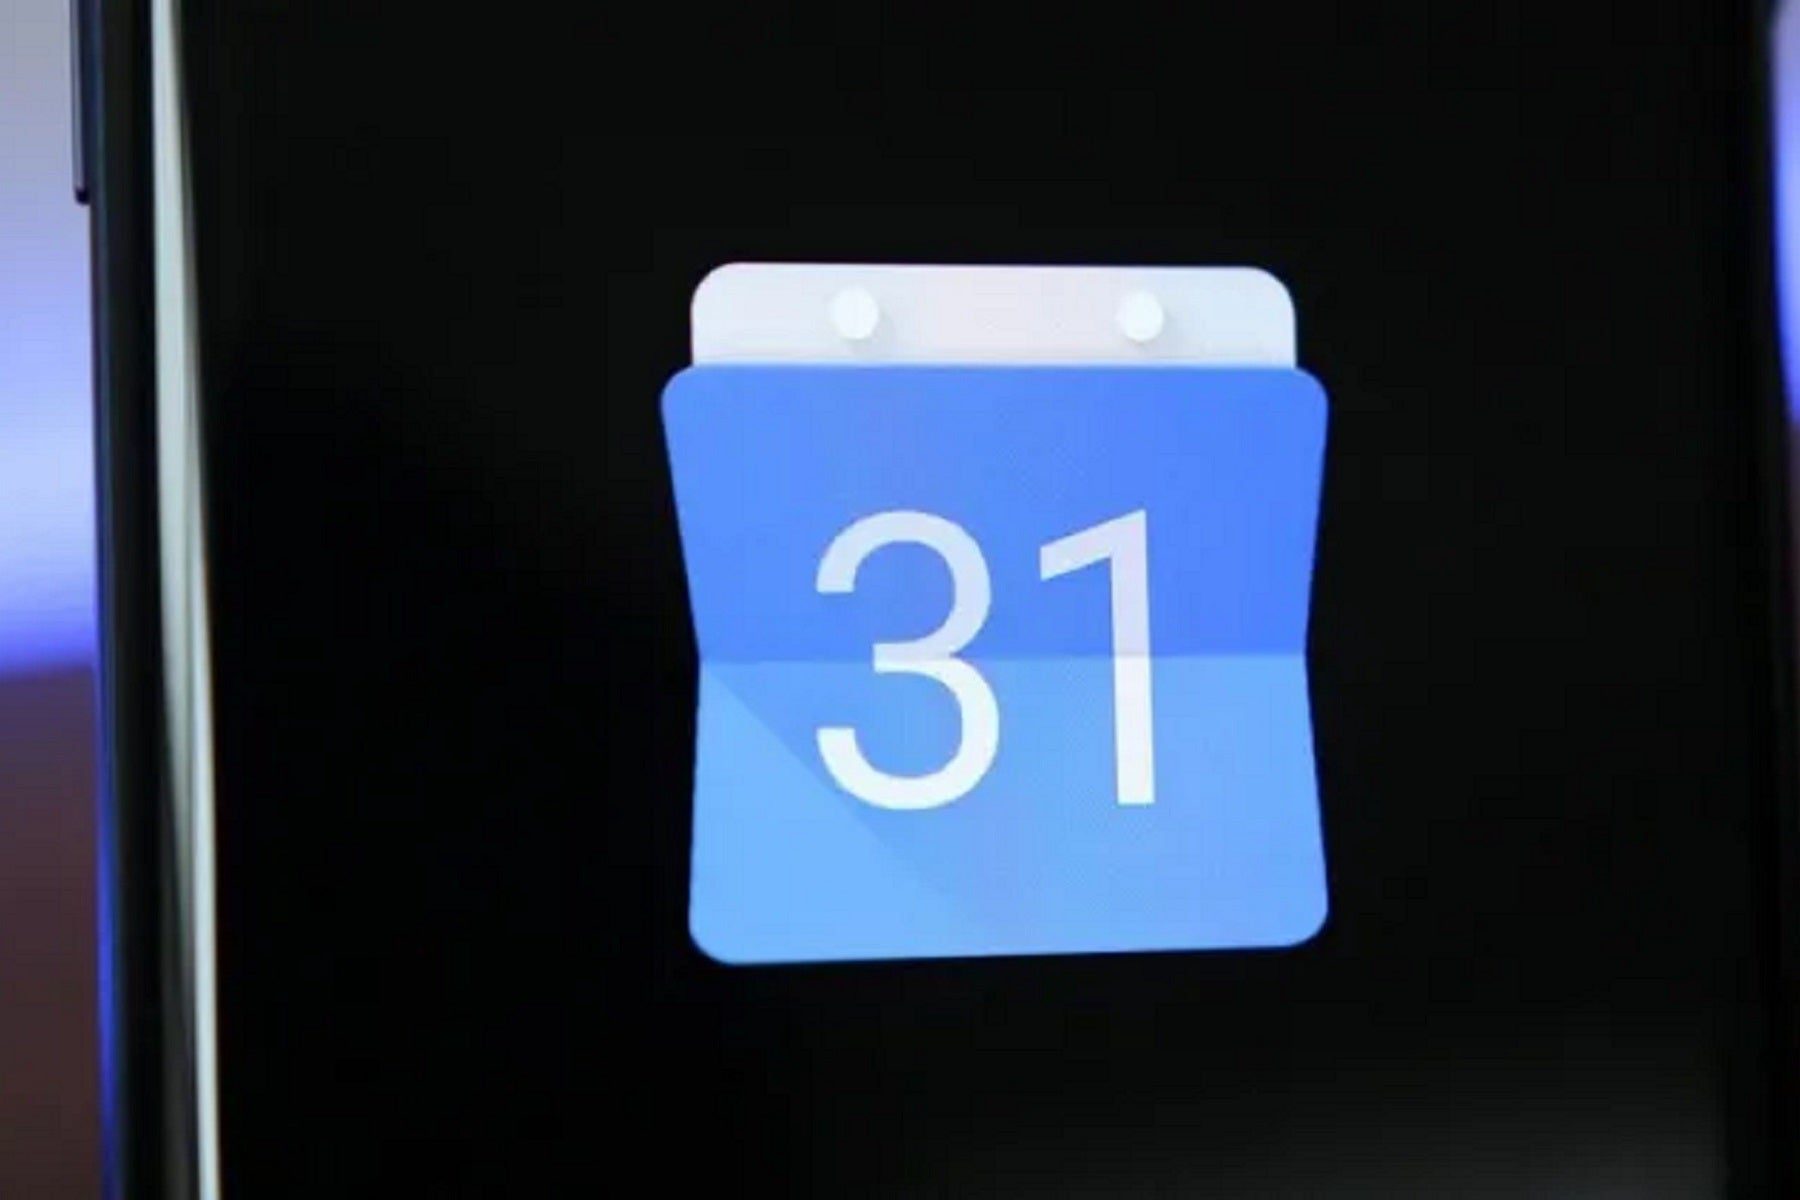 Google Kalender: Was steckt hinter dem Betrug mit dem iPhone X?